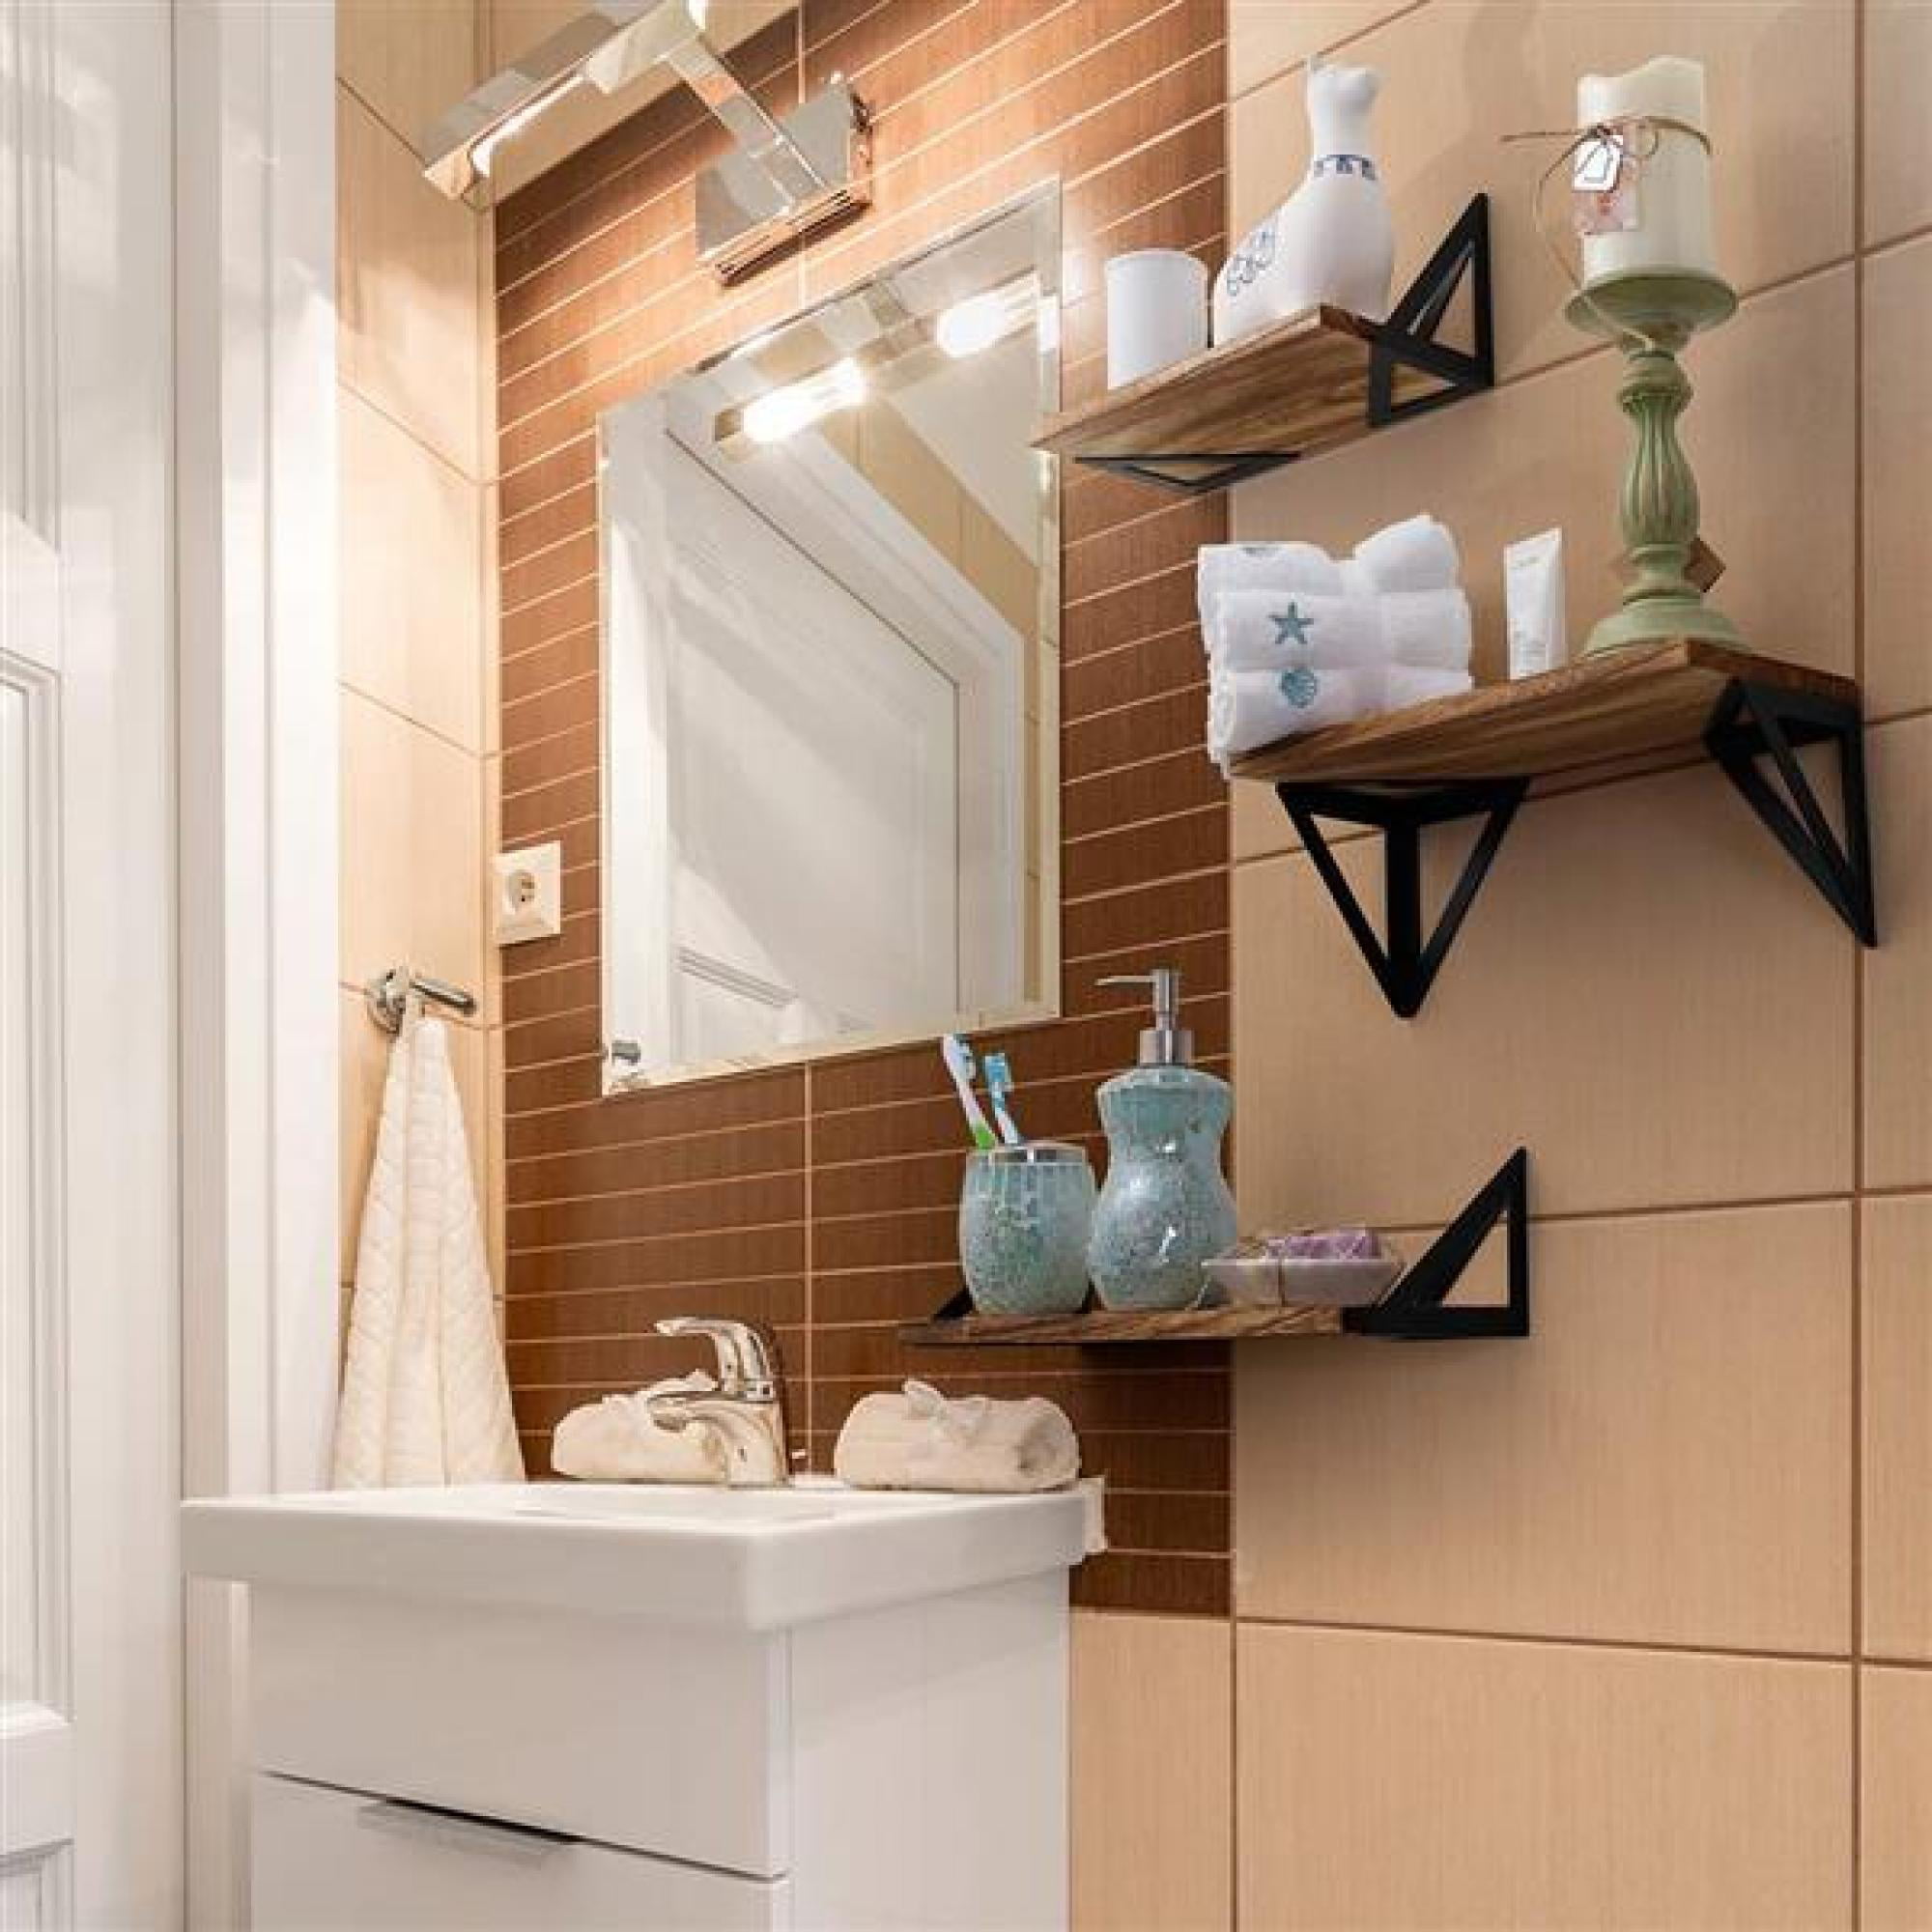 Details about   3 PCS Wall Hanging Shelf Shelves Wood for Bathroom Living Room Bedroom Office 